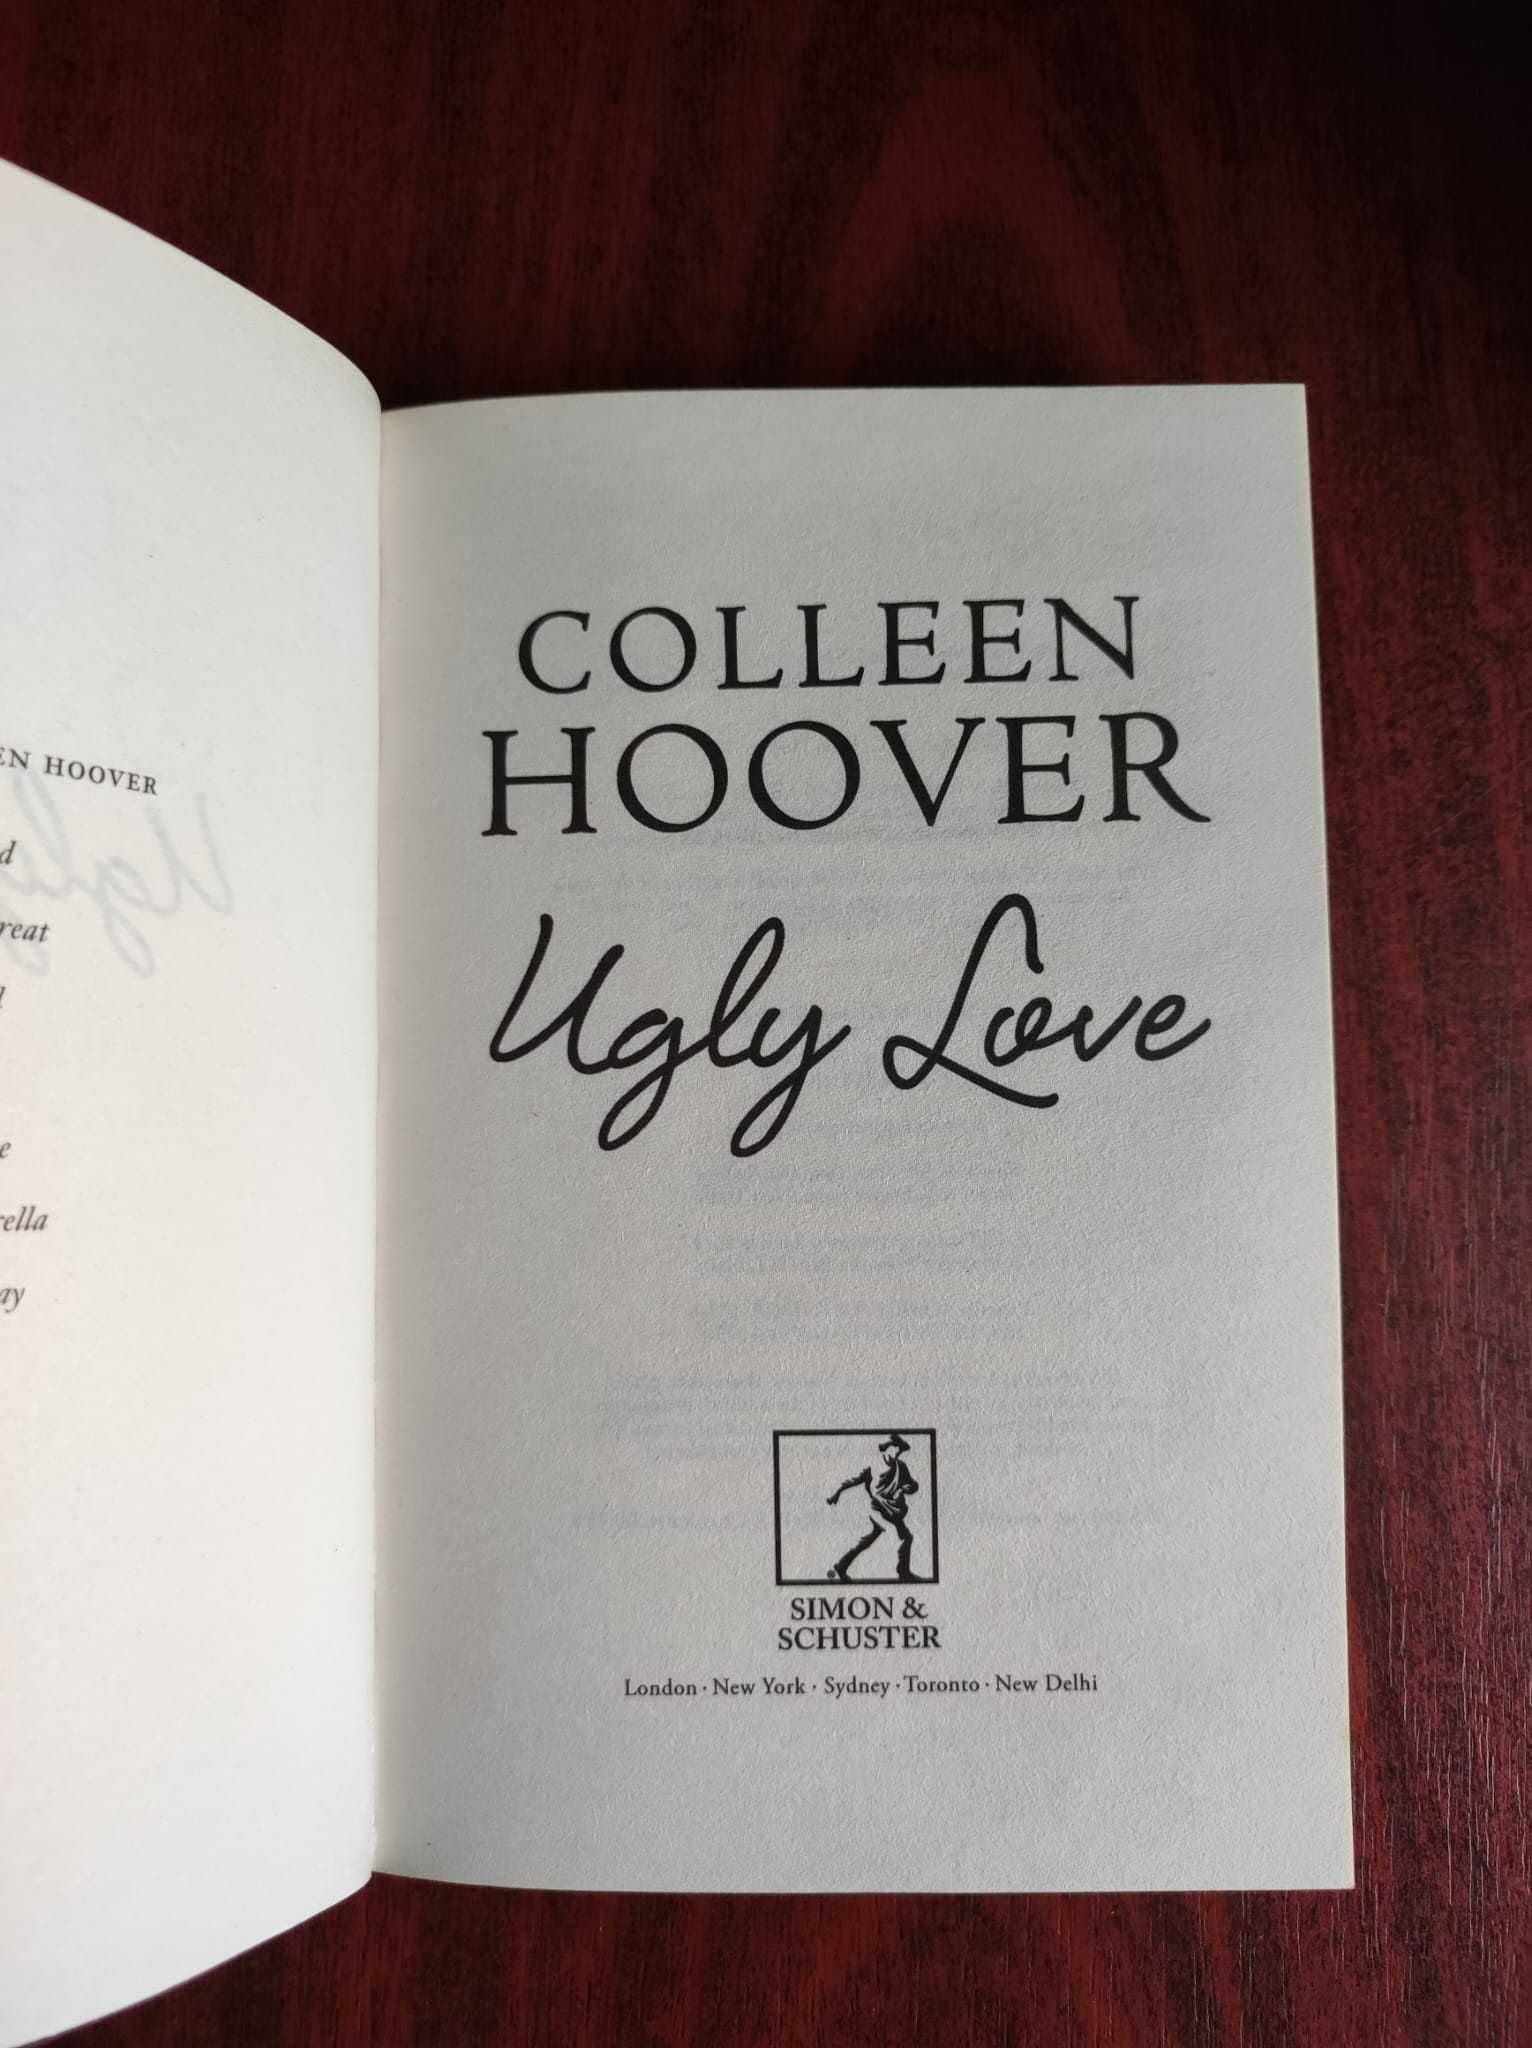 Romanul "Ugly Love" de Colleen Hoover